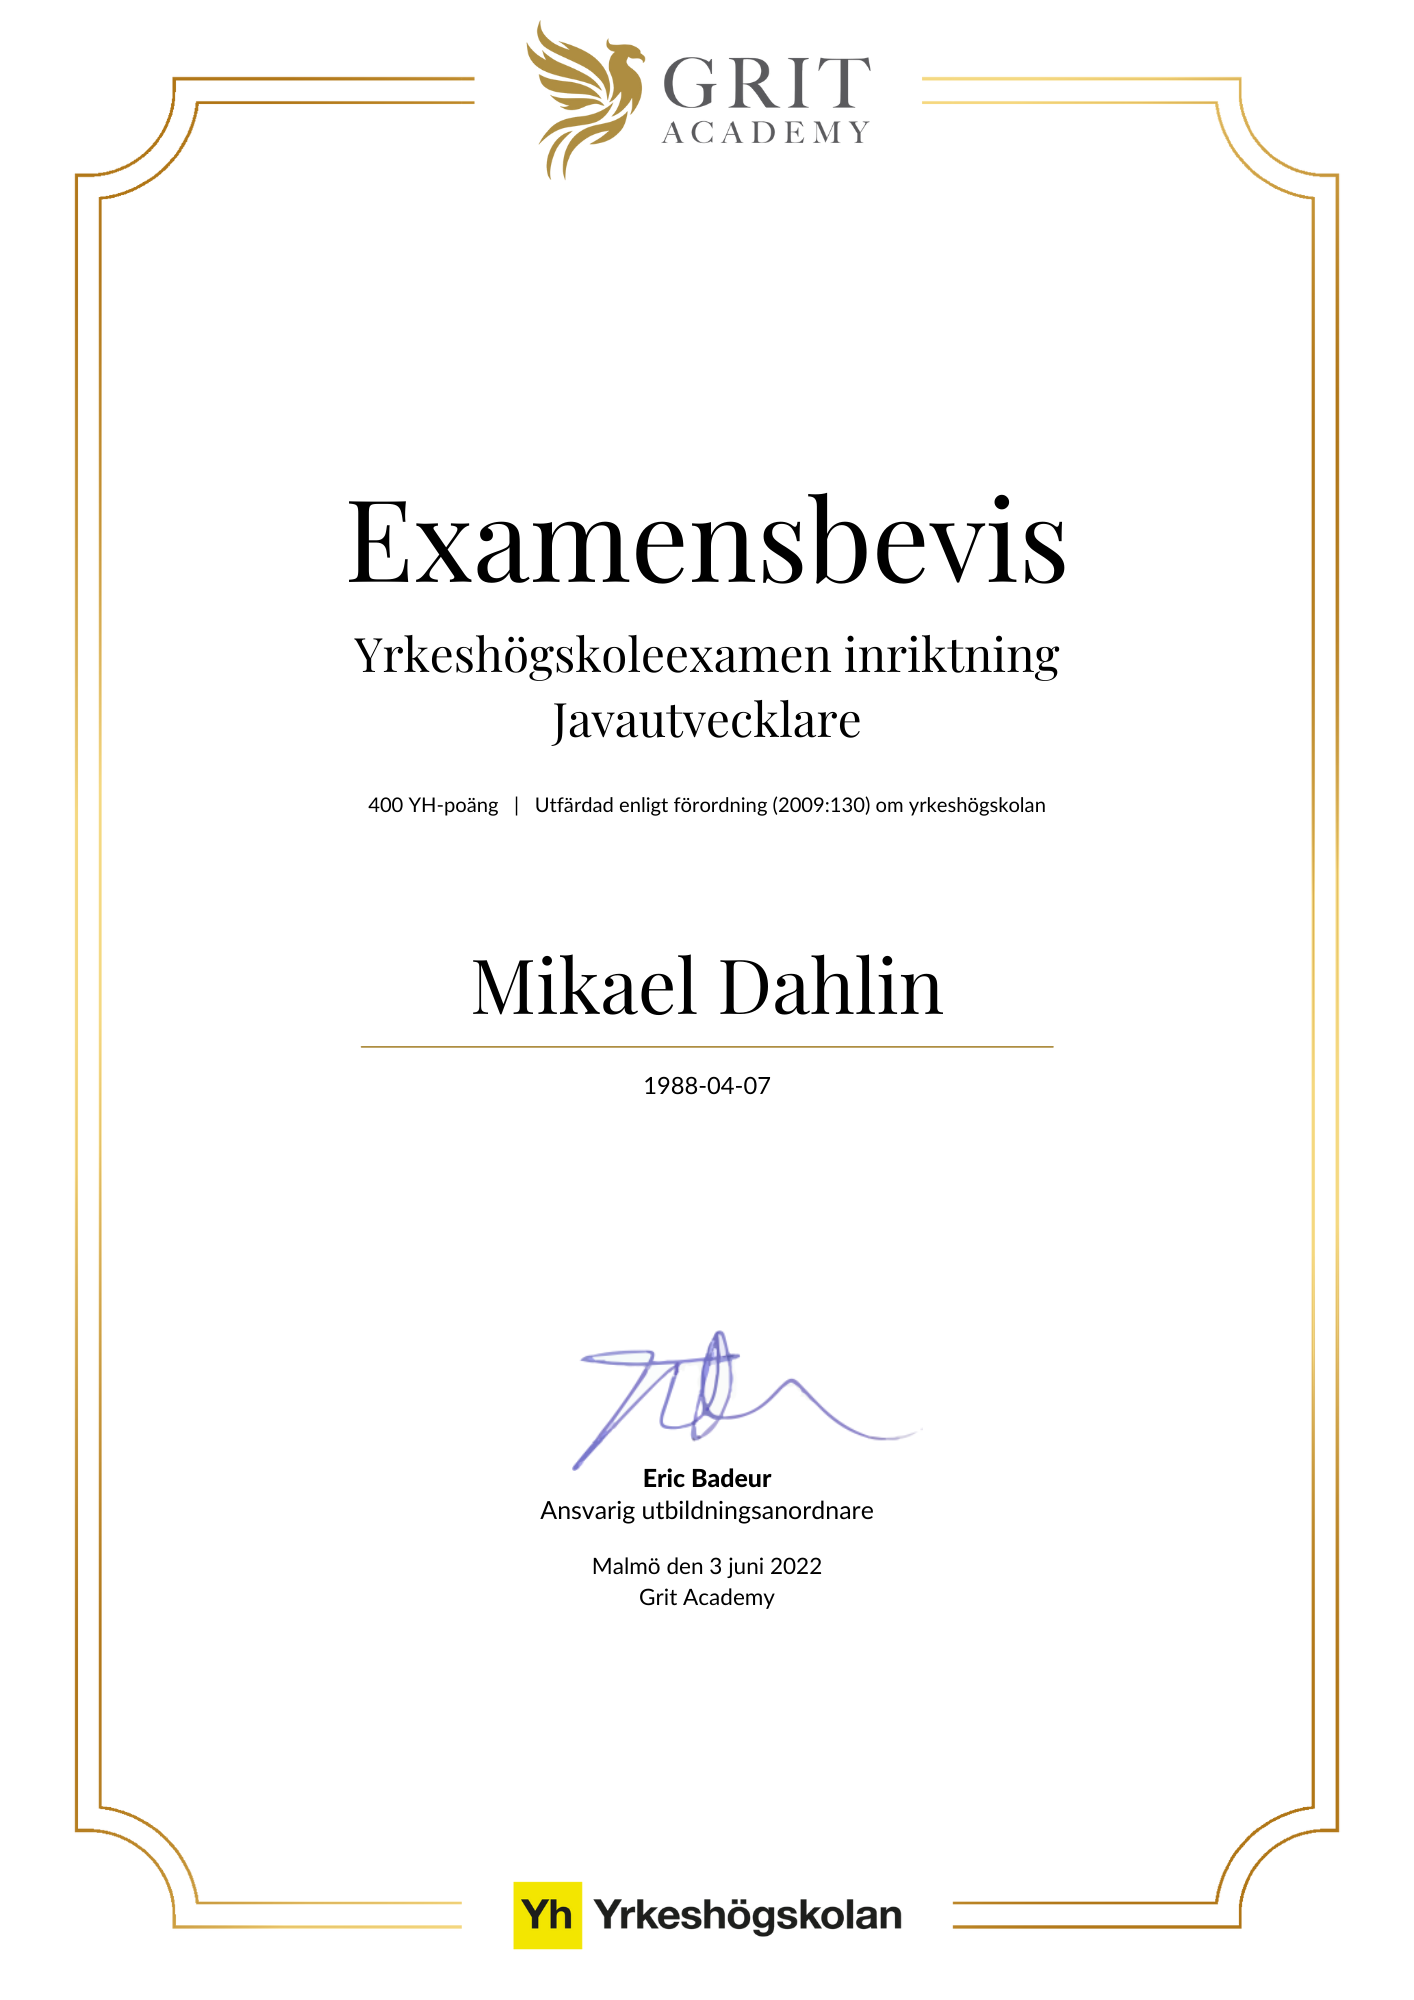 Examensbevis Mikael Dahlin - 1